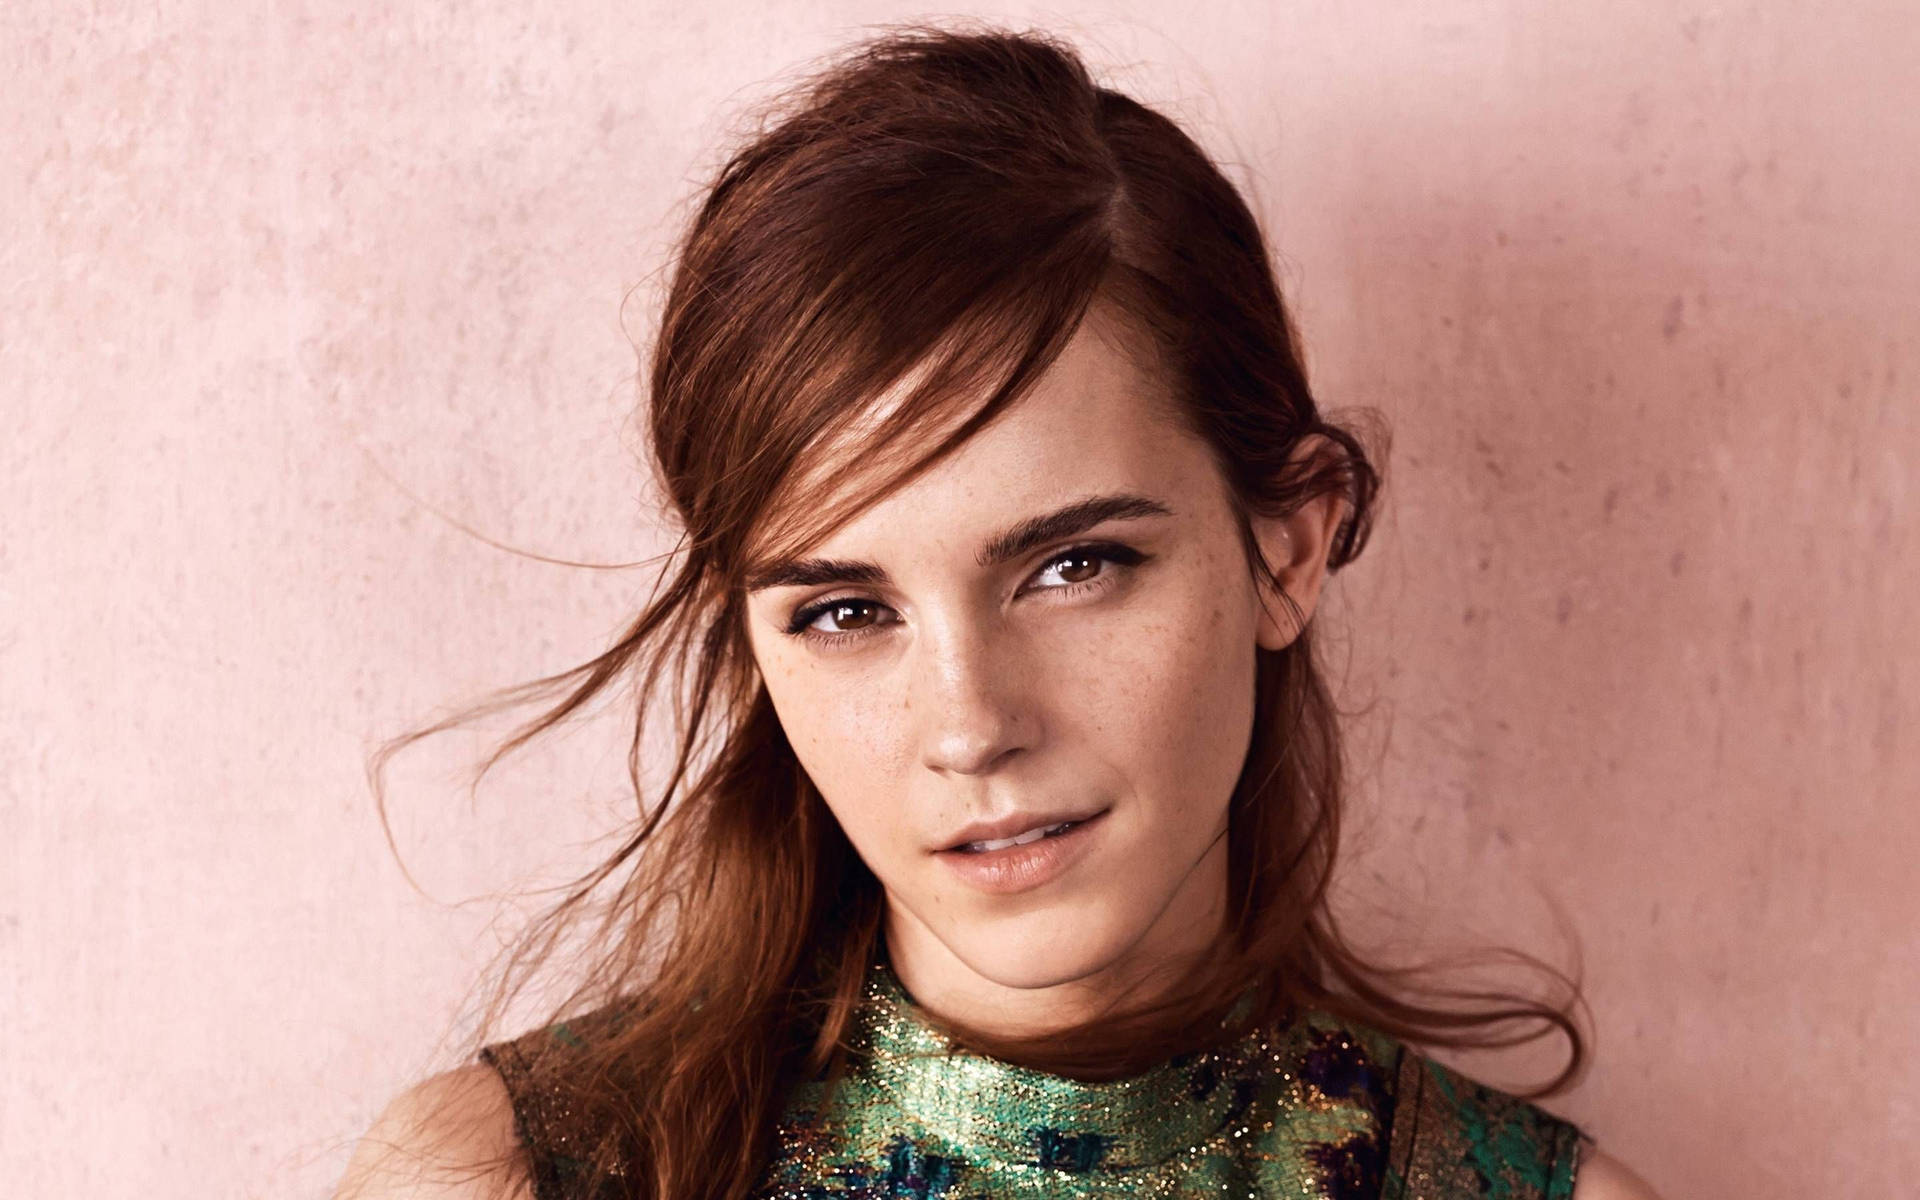 Emma Watson Strikes A Confident Pose. Background